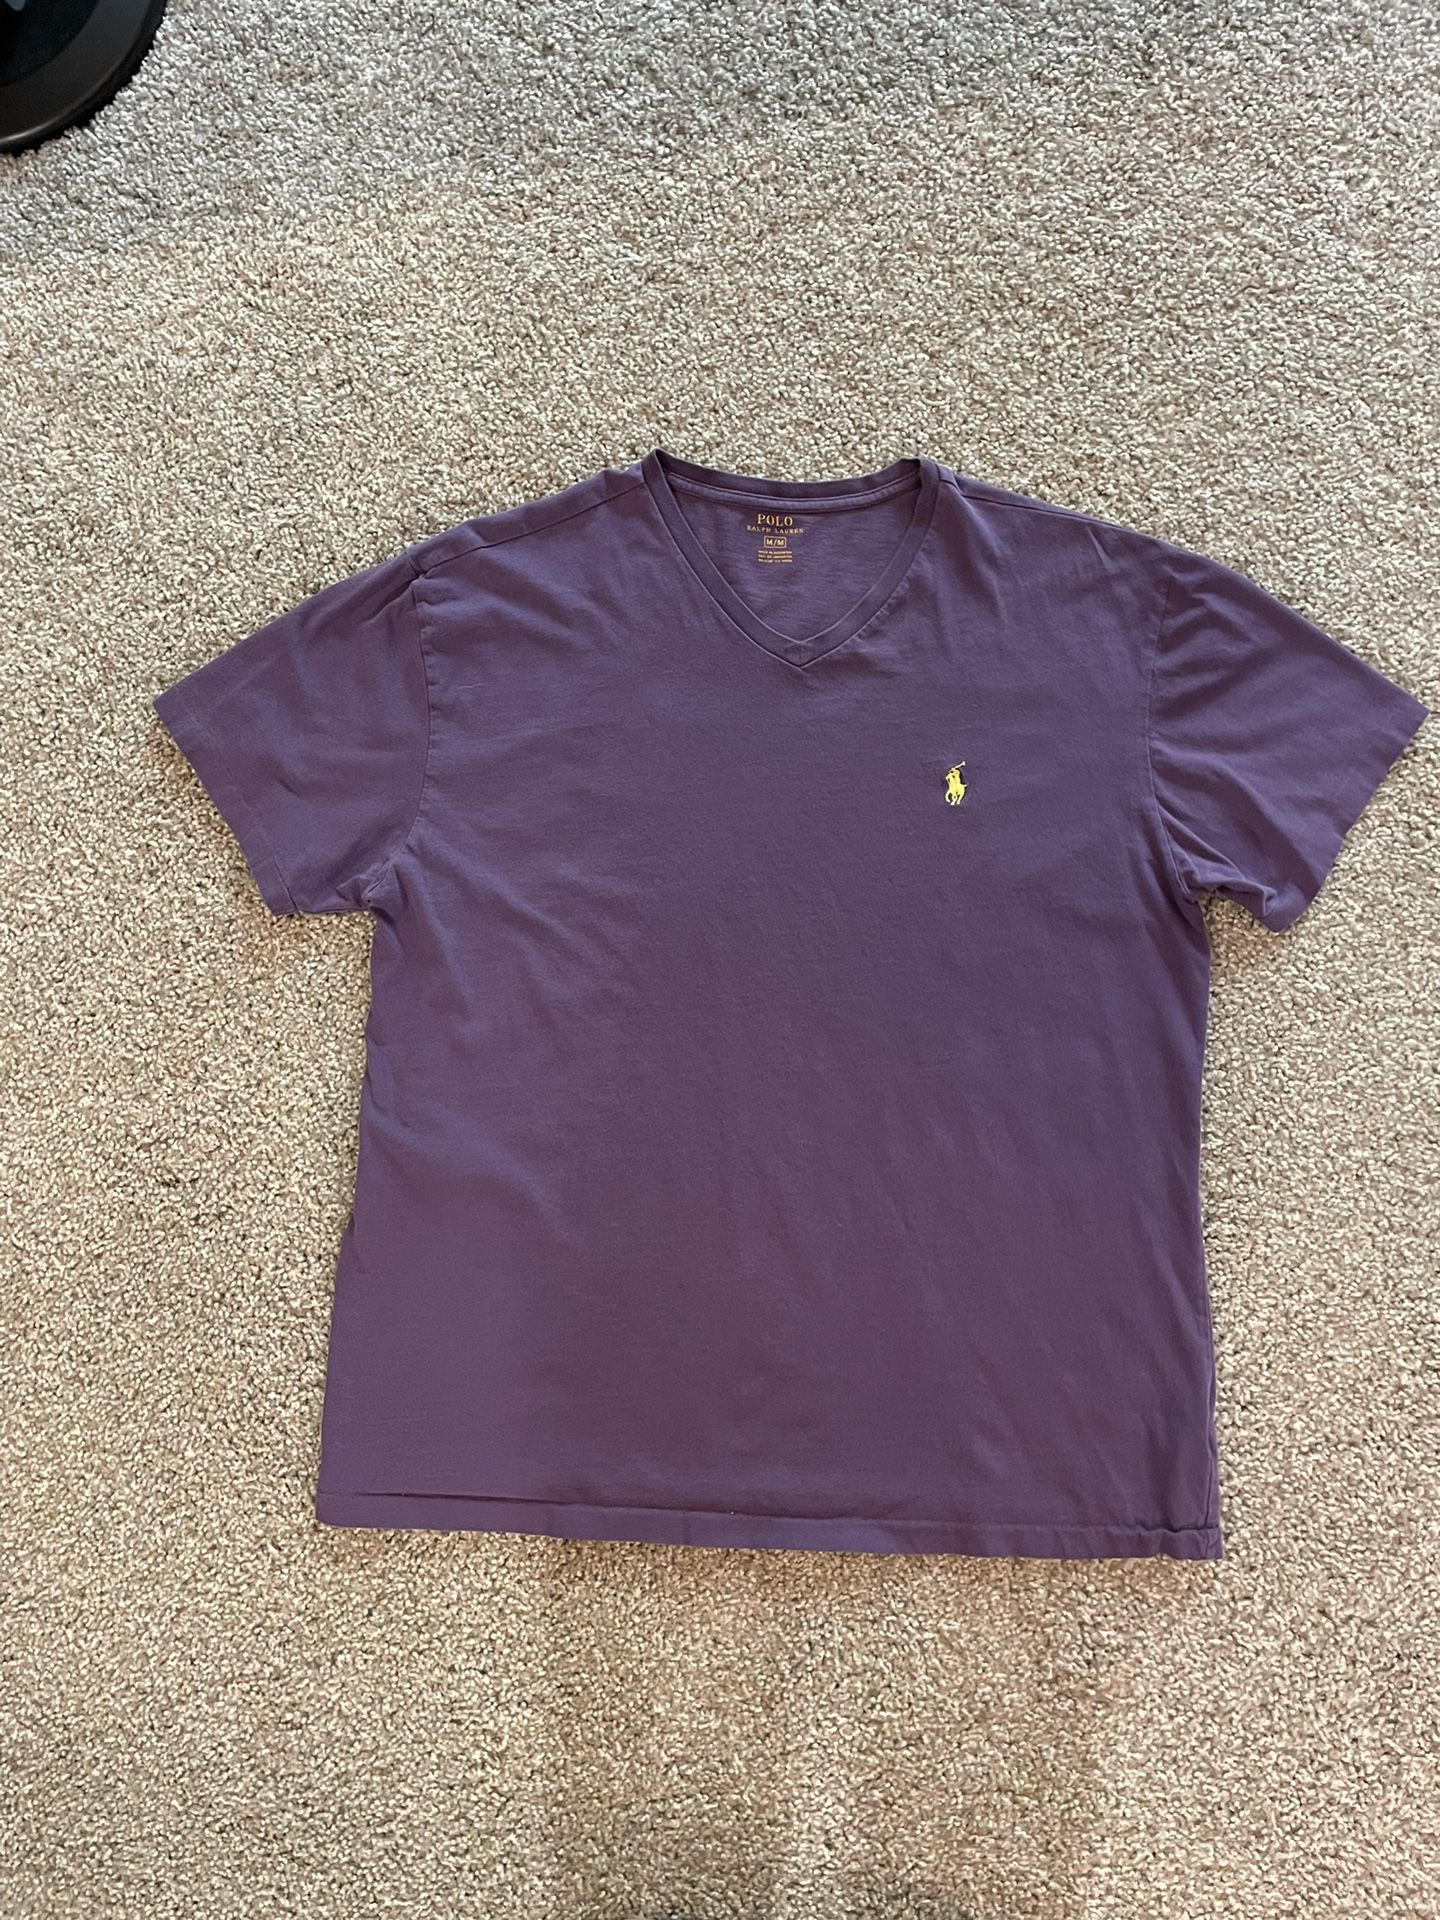 Polo Ralph Lauren V Neck T Shirt Purple With Yellow Pony Men’s Medium